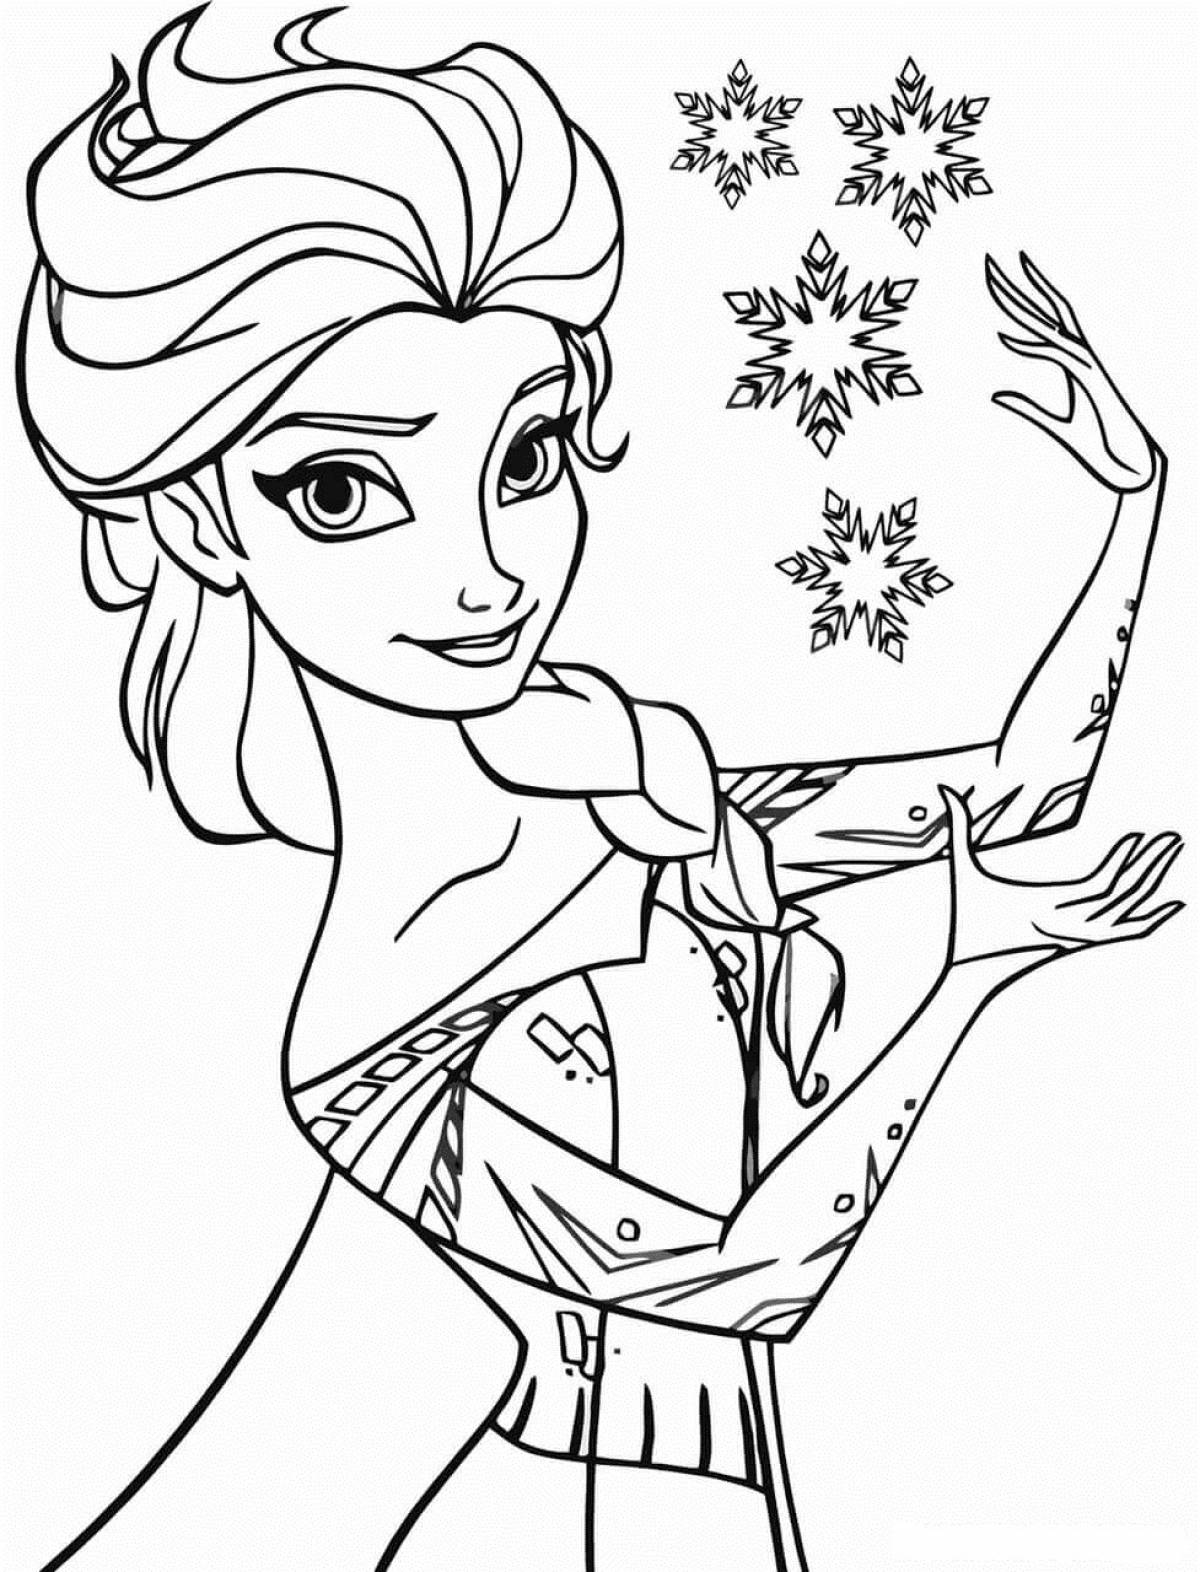 Elsa and snowflakes